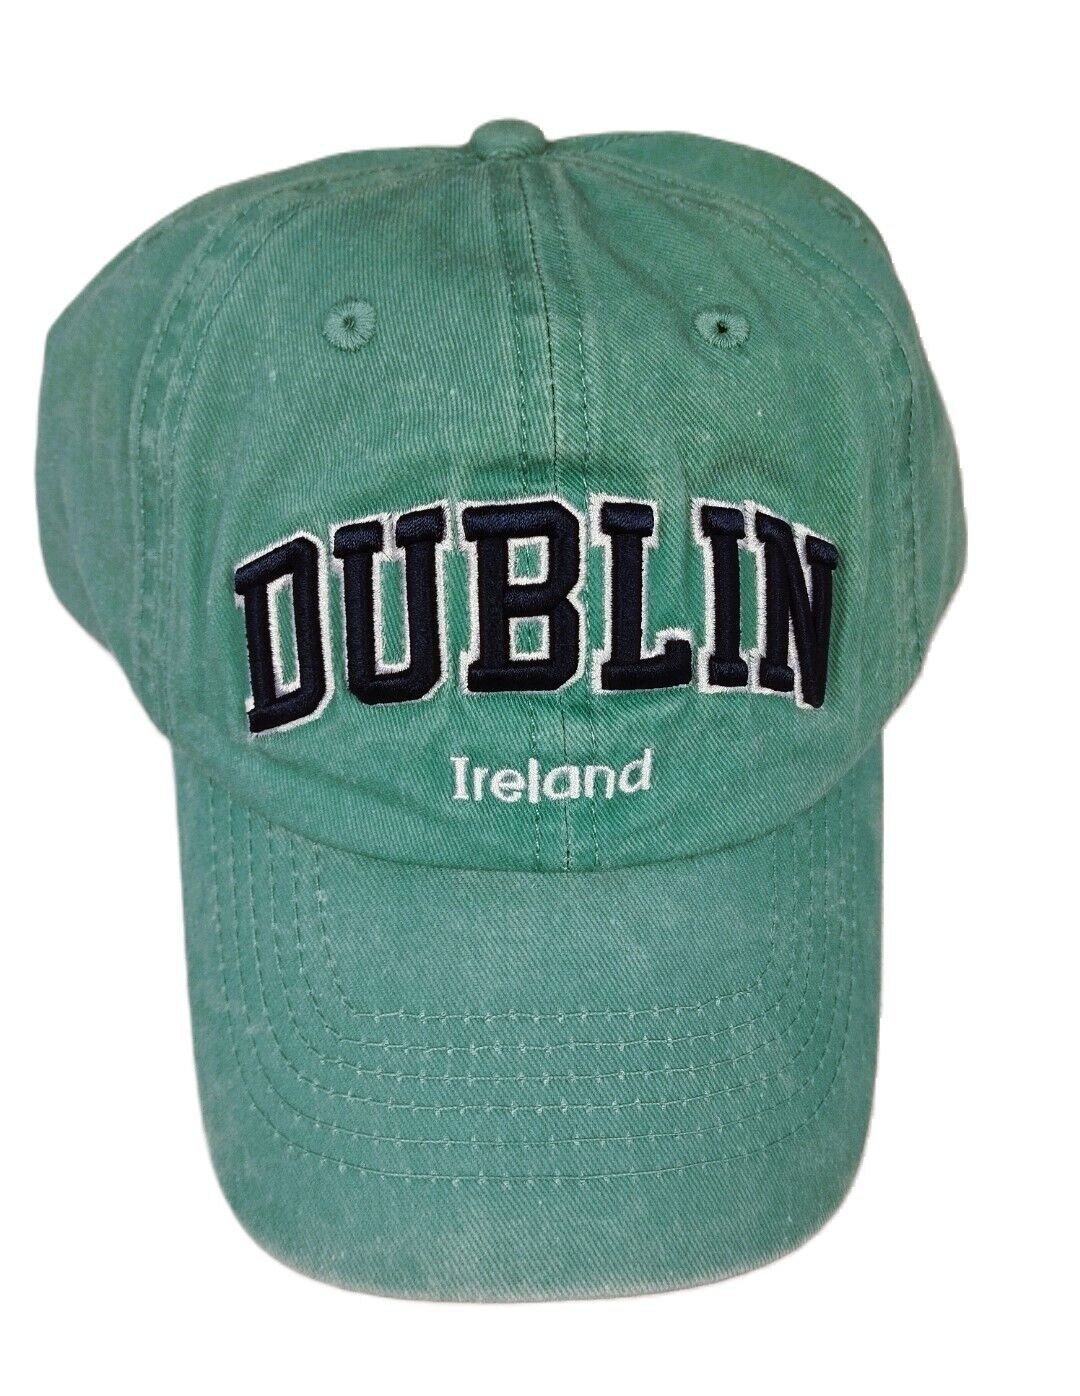 Dublin Baseball Cap, Light Blue, Robin Ruth